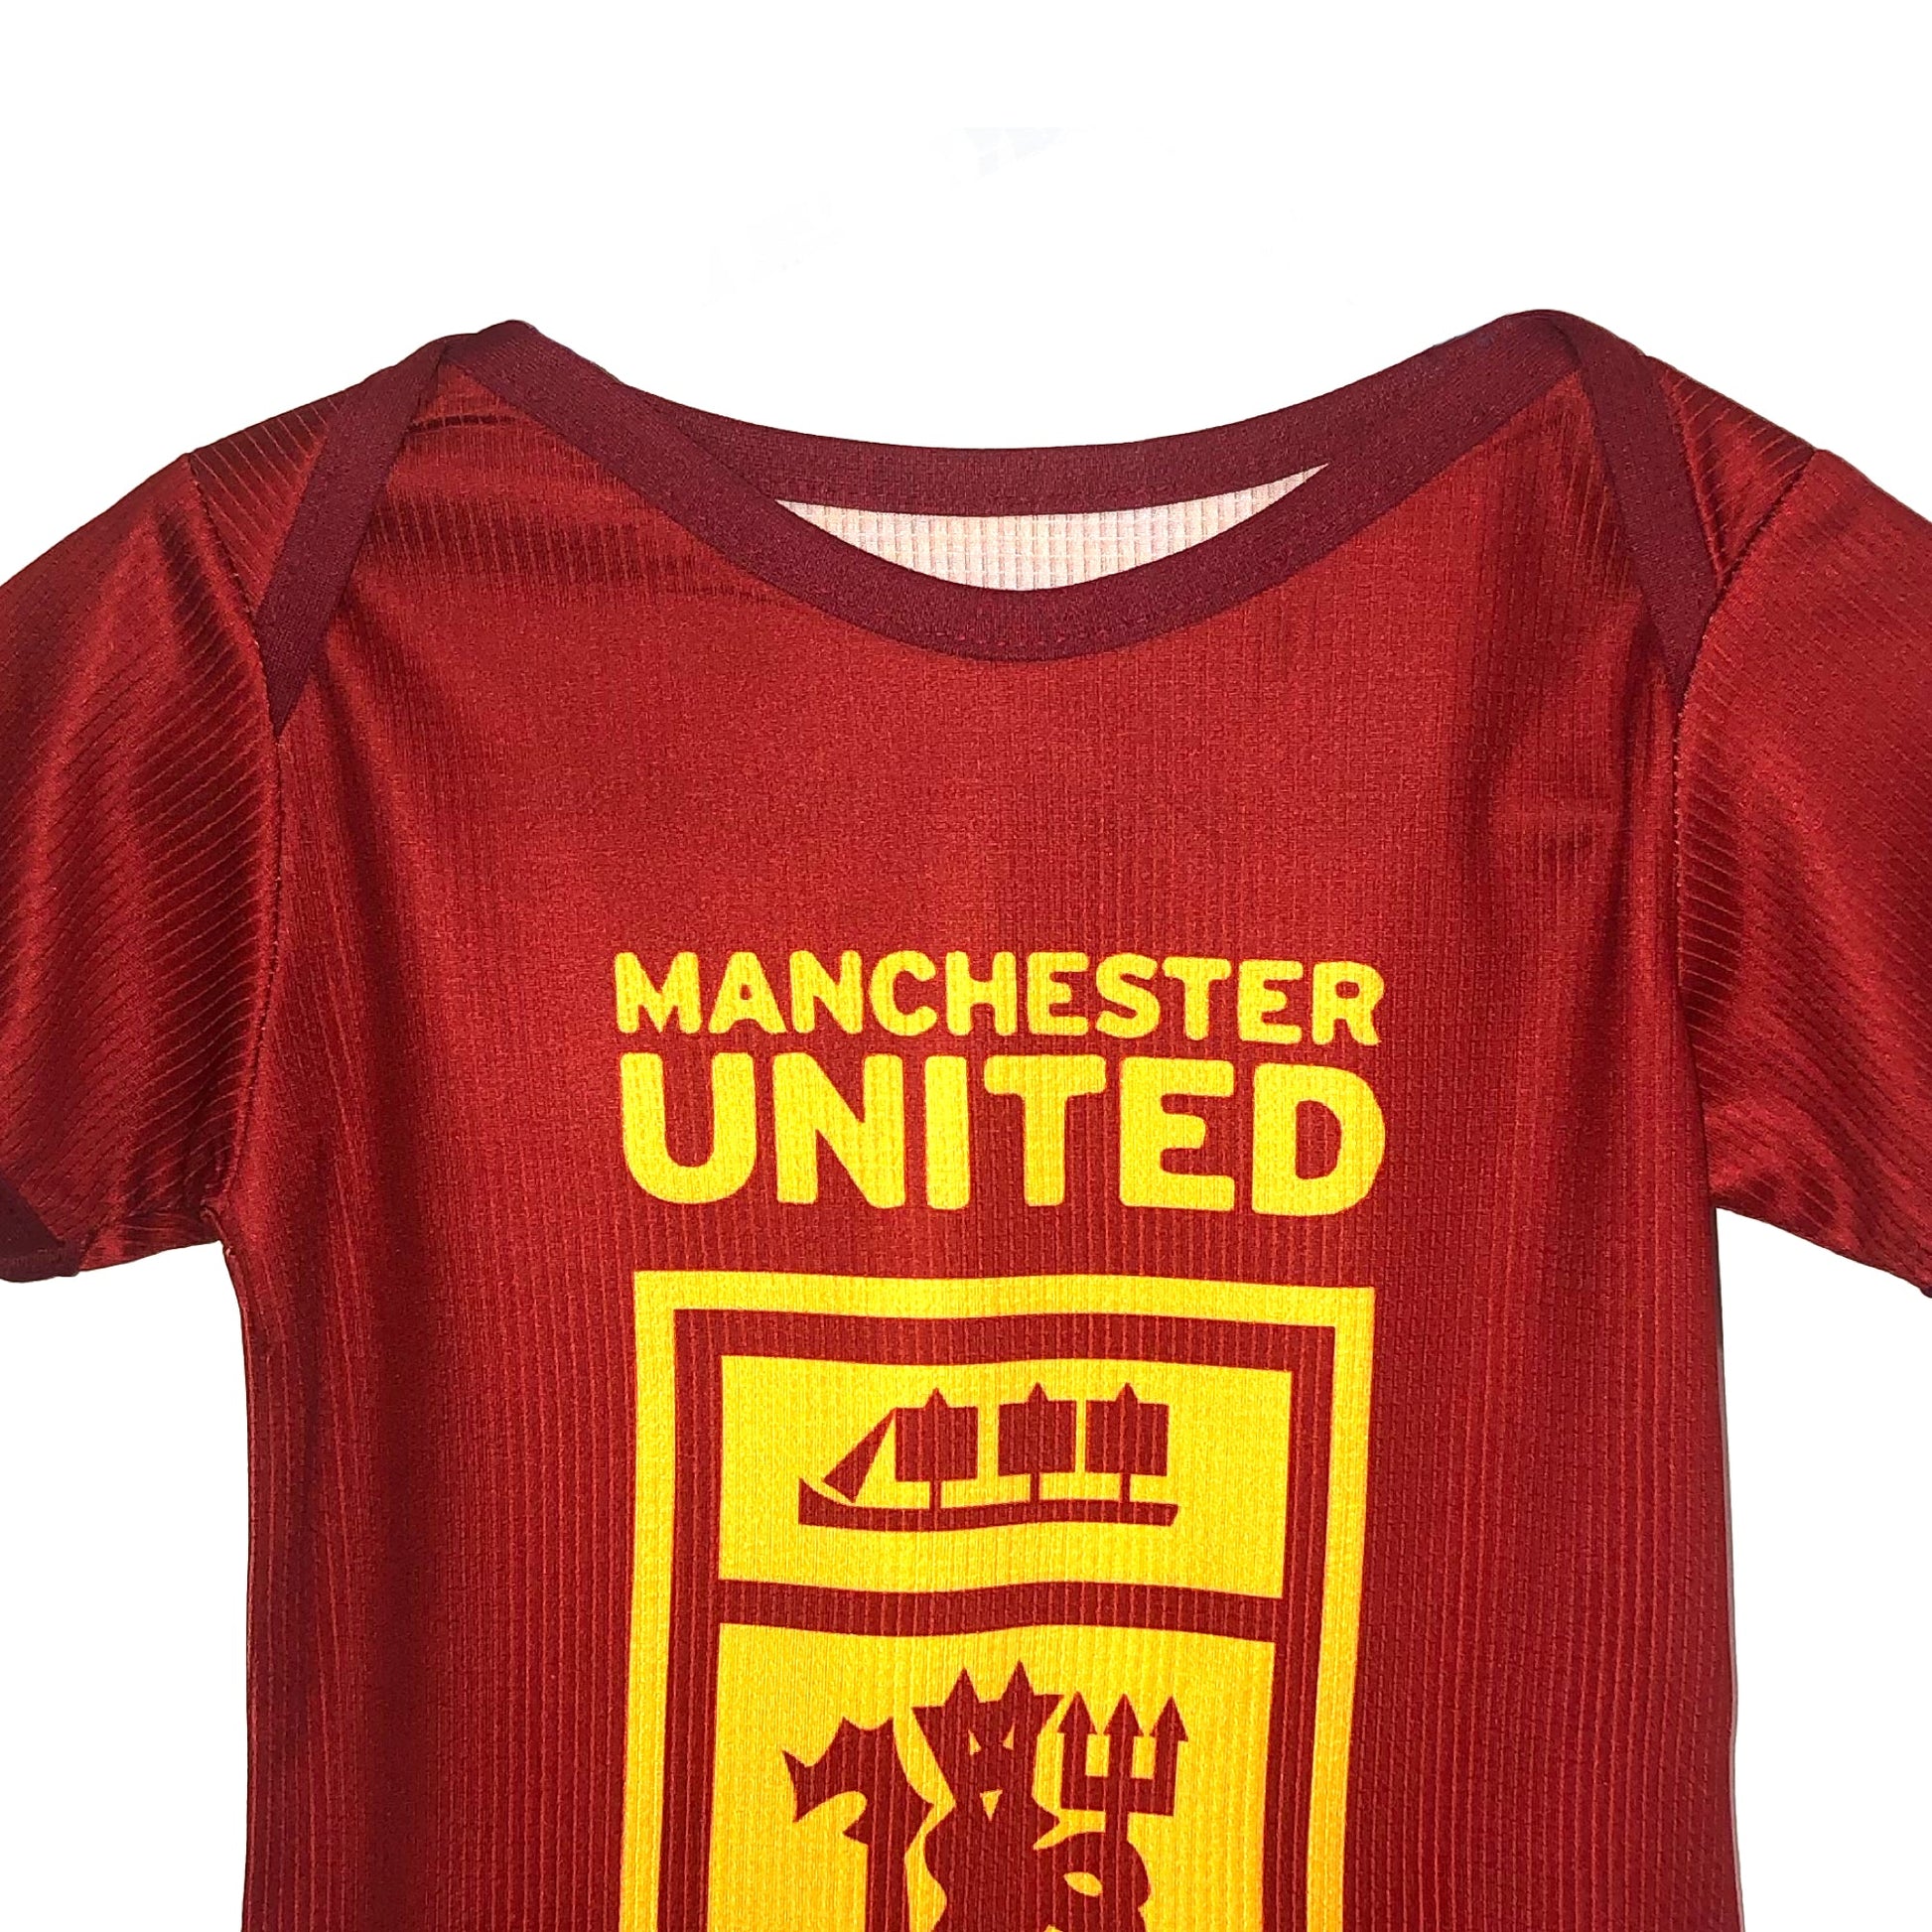 Manchester united limited design infant bodysuit - Mitani Store